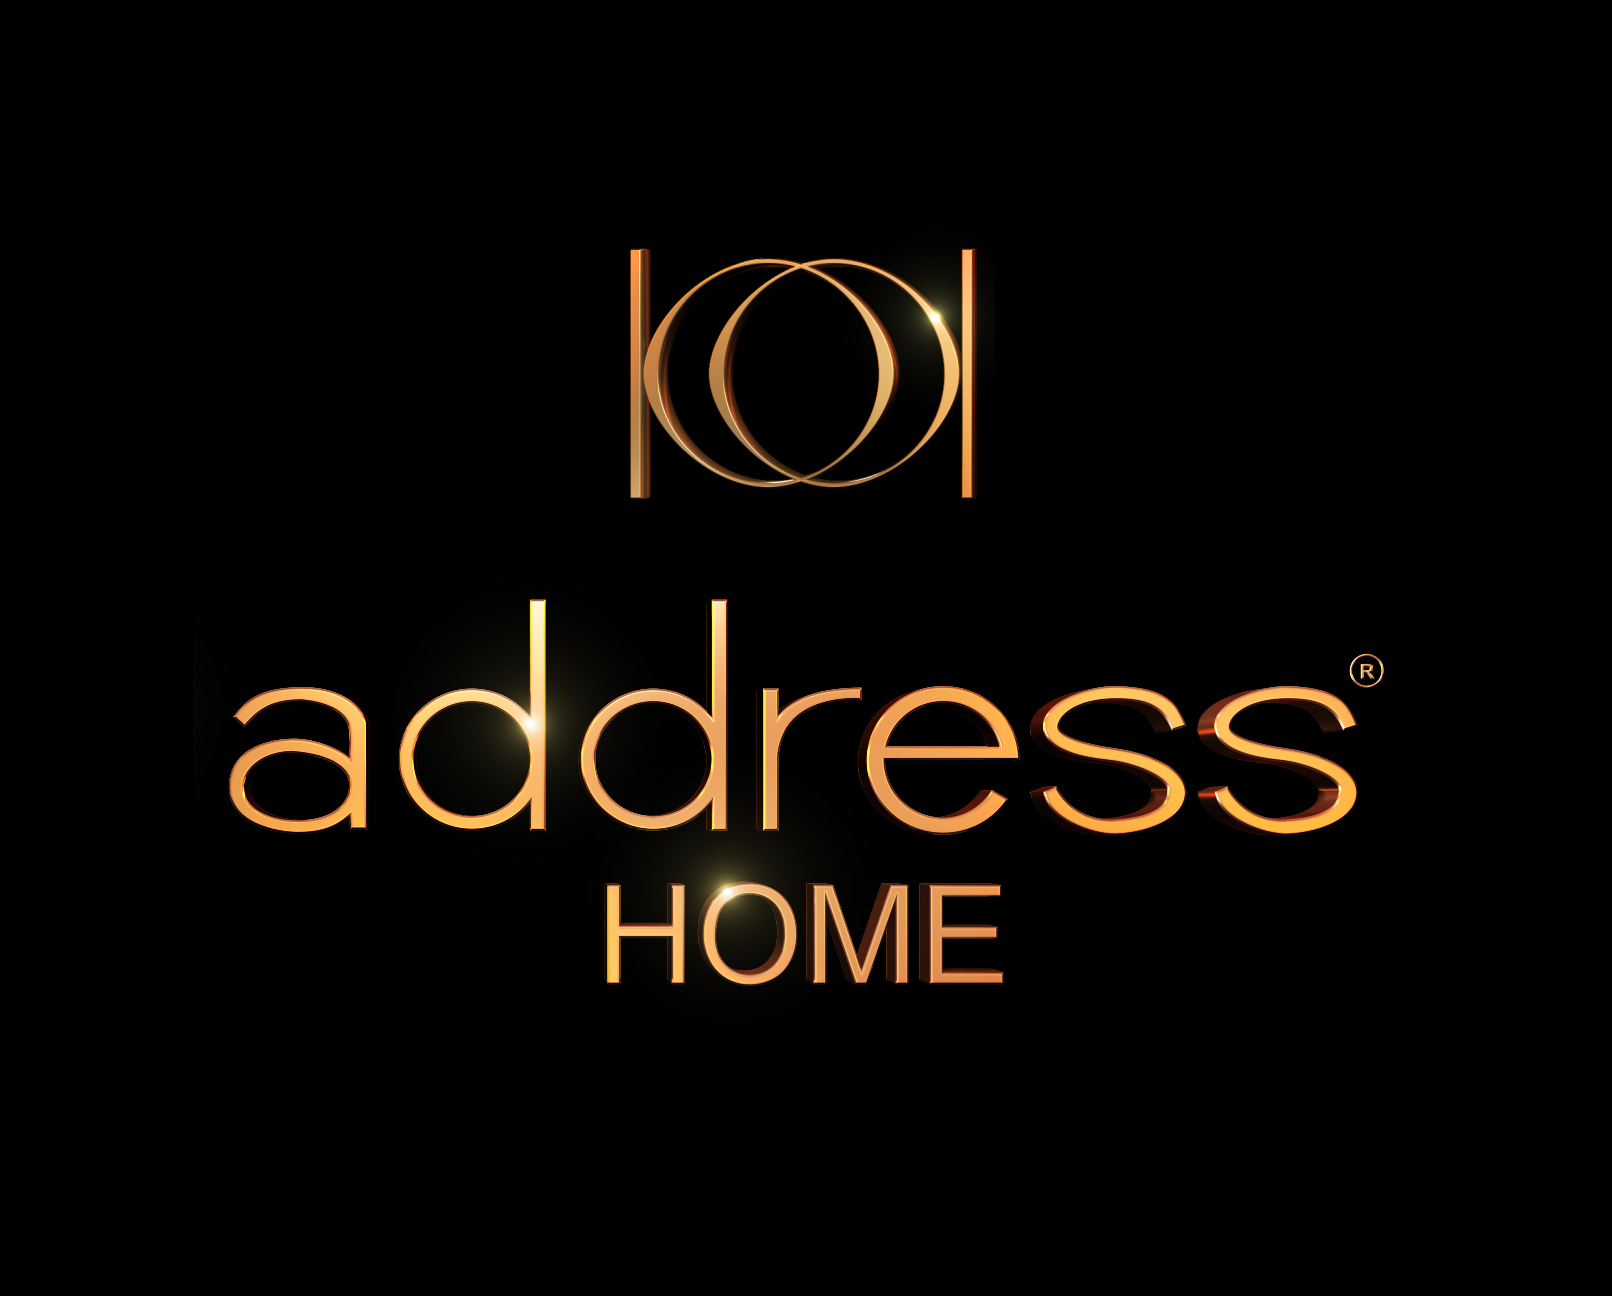 Address Home